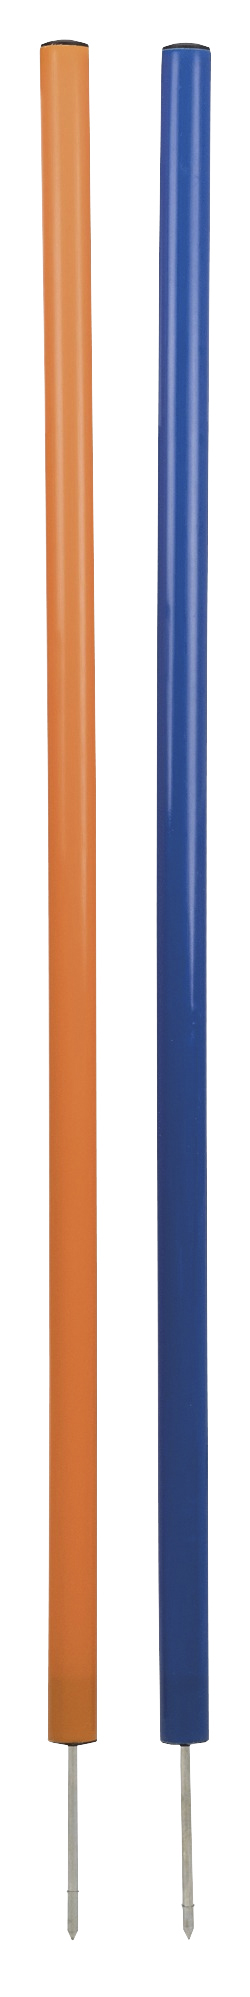 Agility Trixie Slalompinnar Blå/Orange